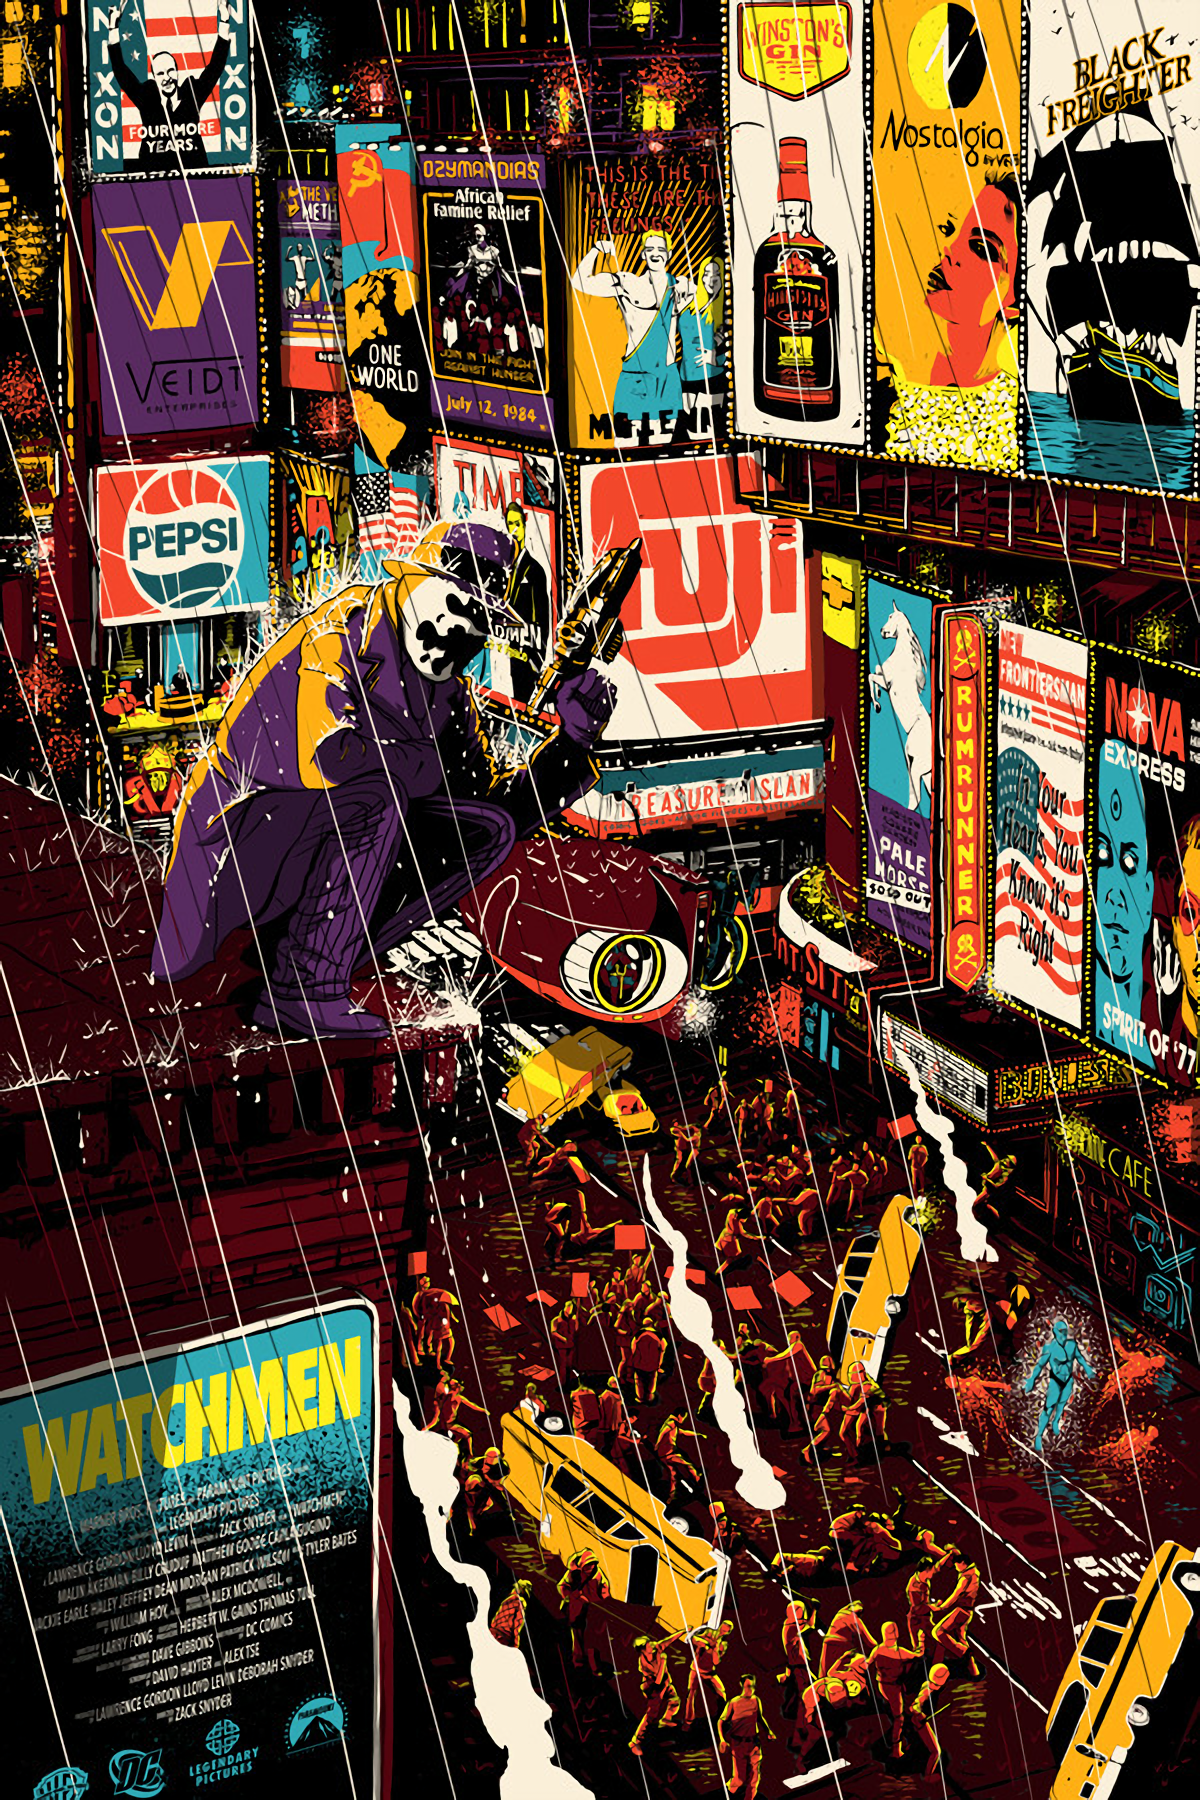 RupertBBAre. Watchmen, Comics artwork, Superhero comic